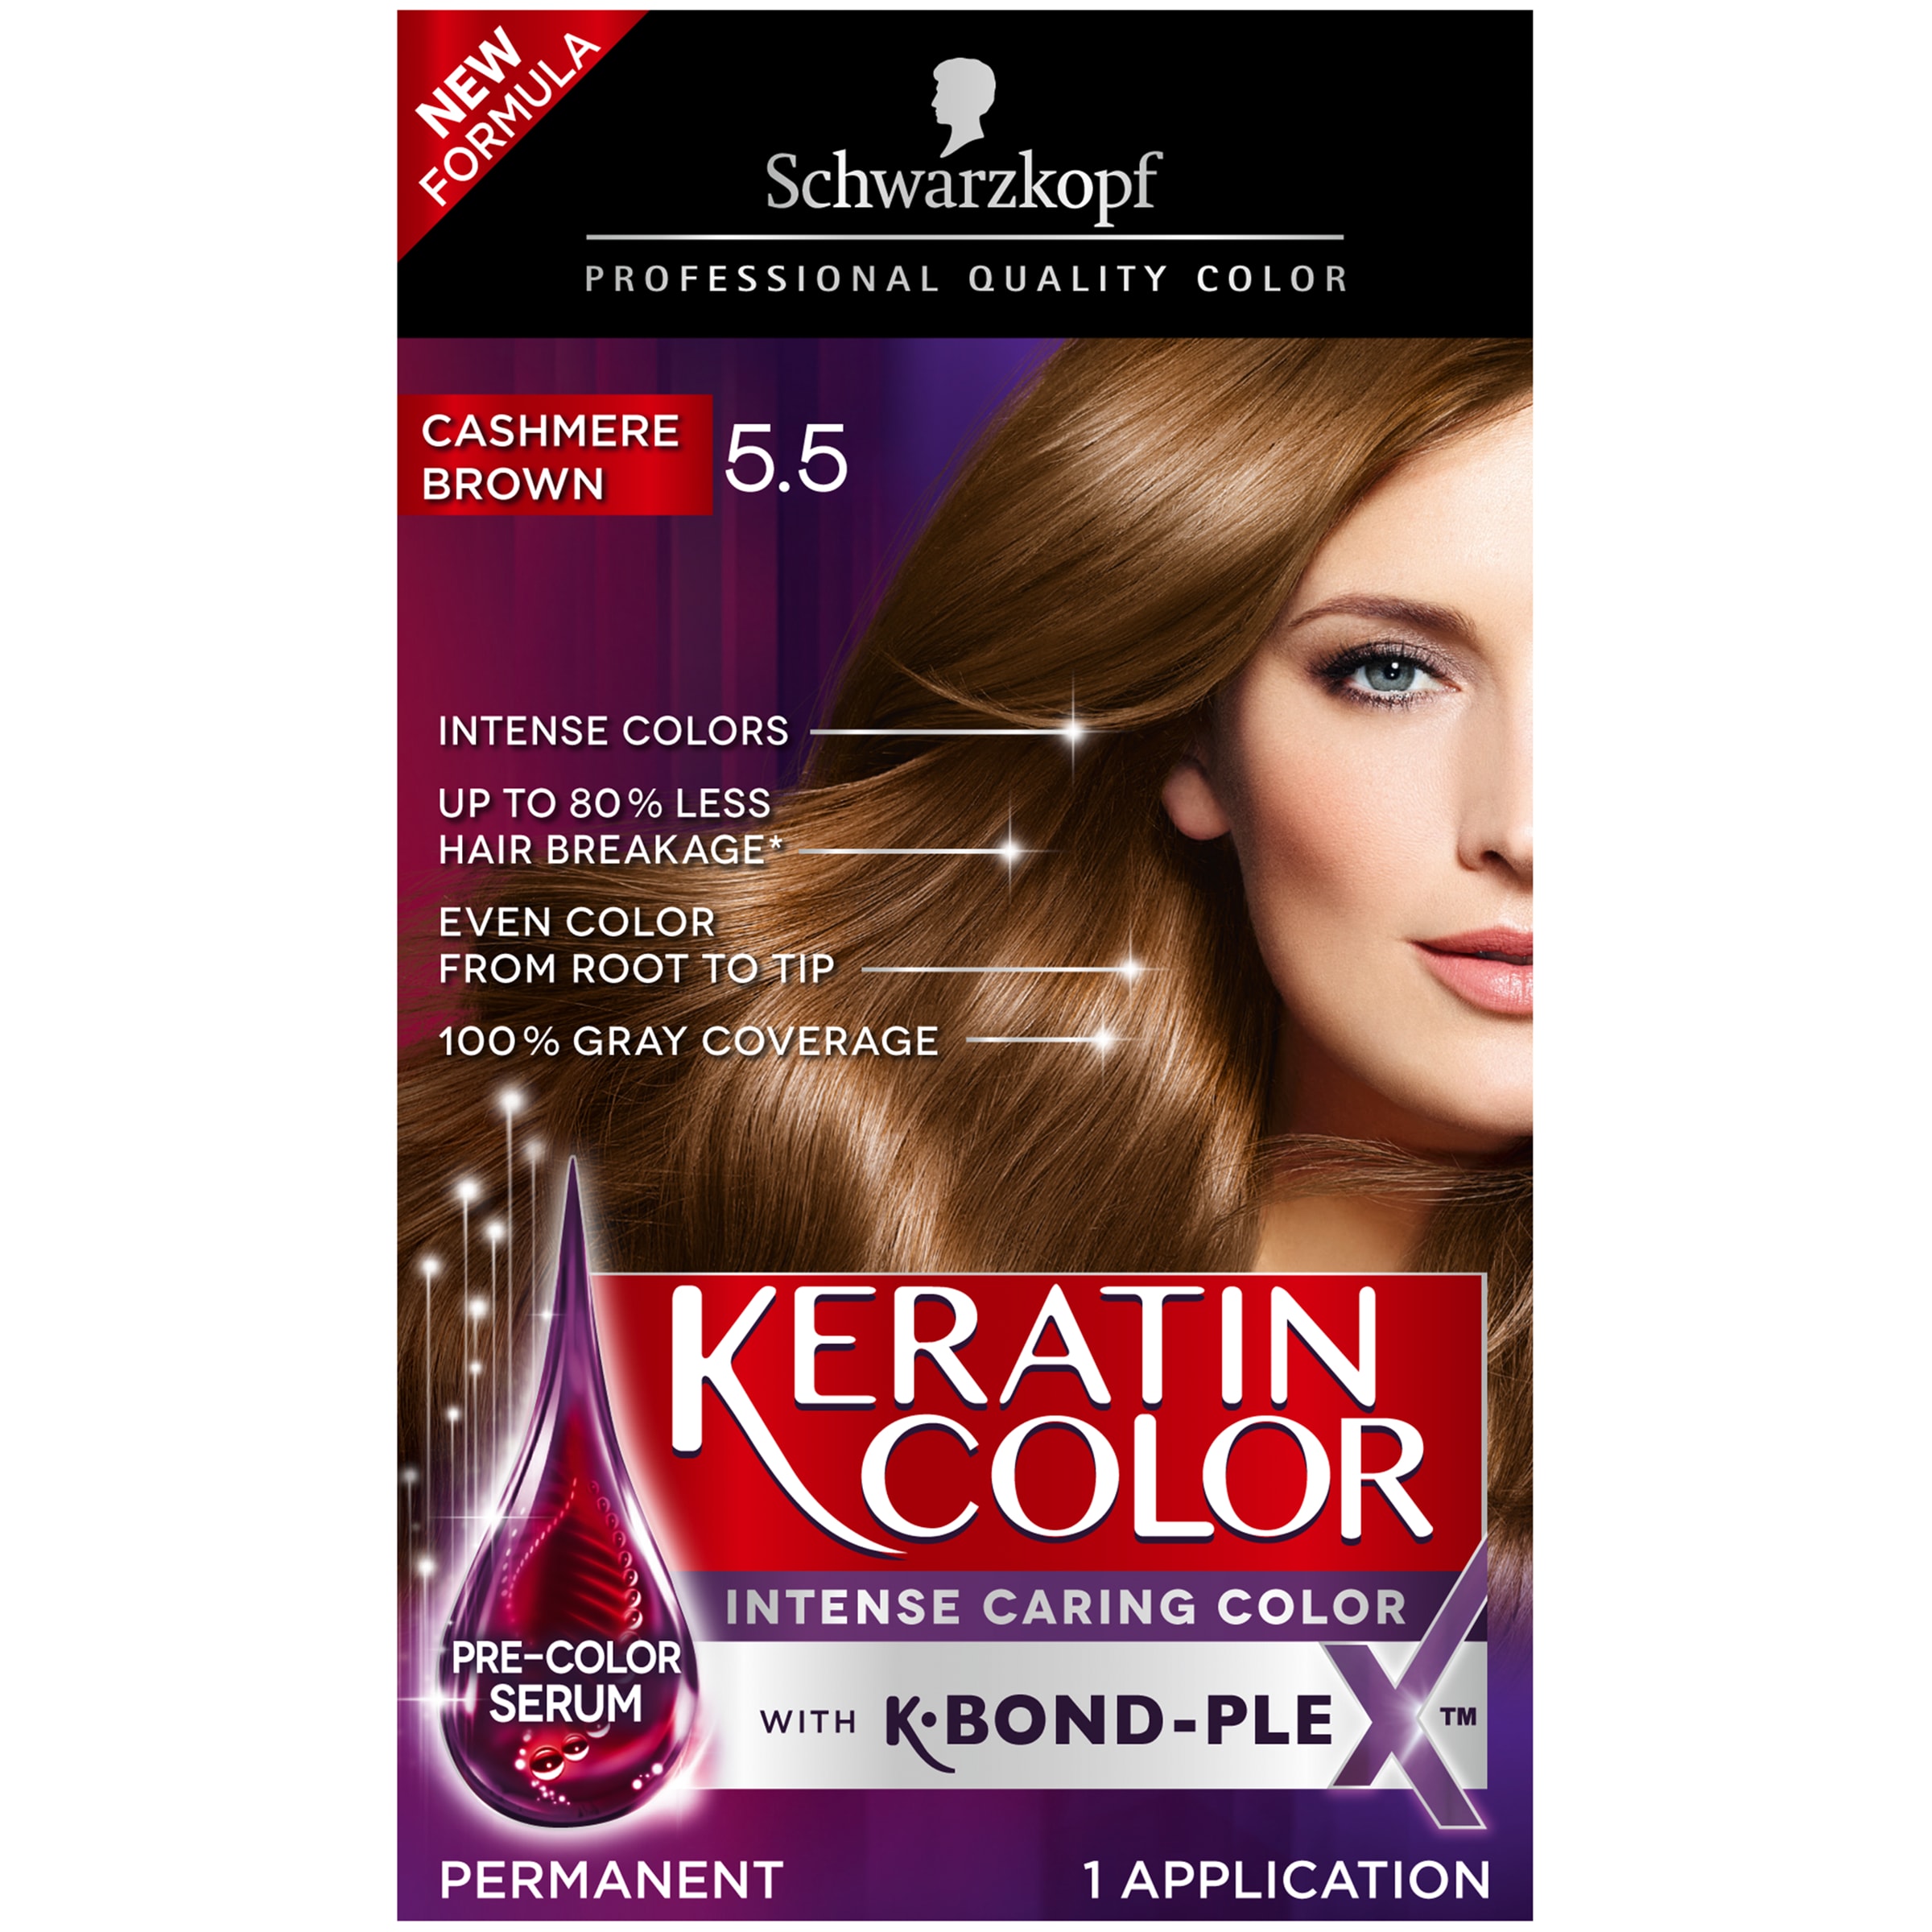 Schwarzkopf Keratin Color Permanent Hair Color Cream, 5.5 Cashmere Brown - image 1 of 10